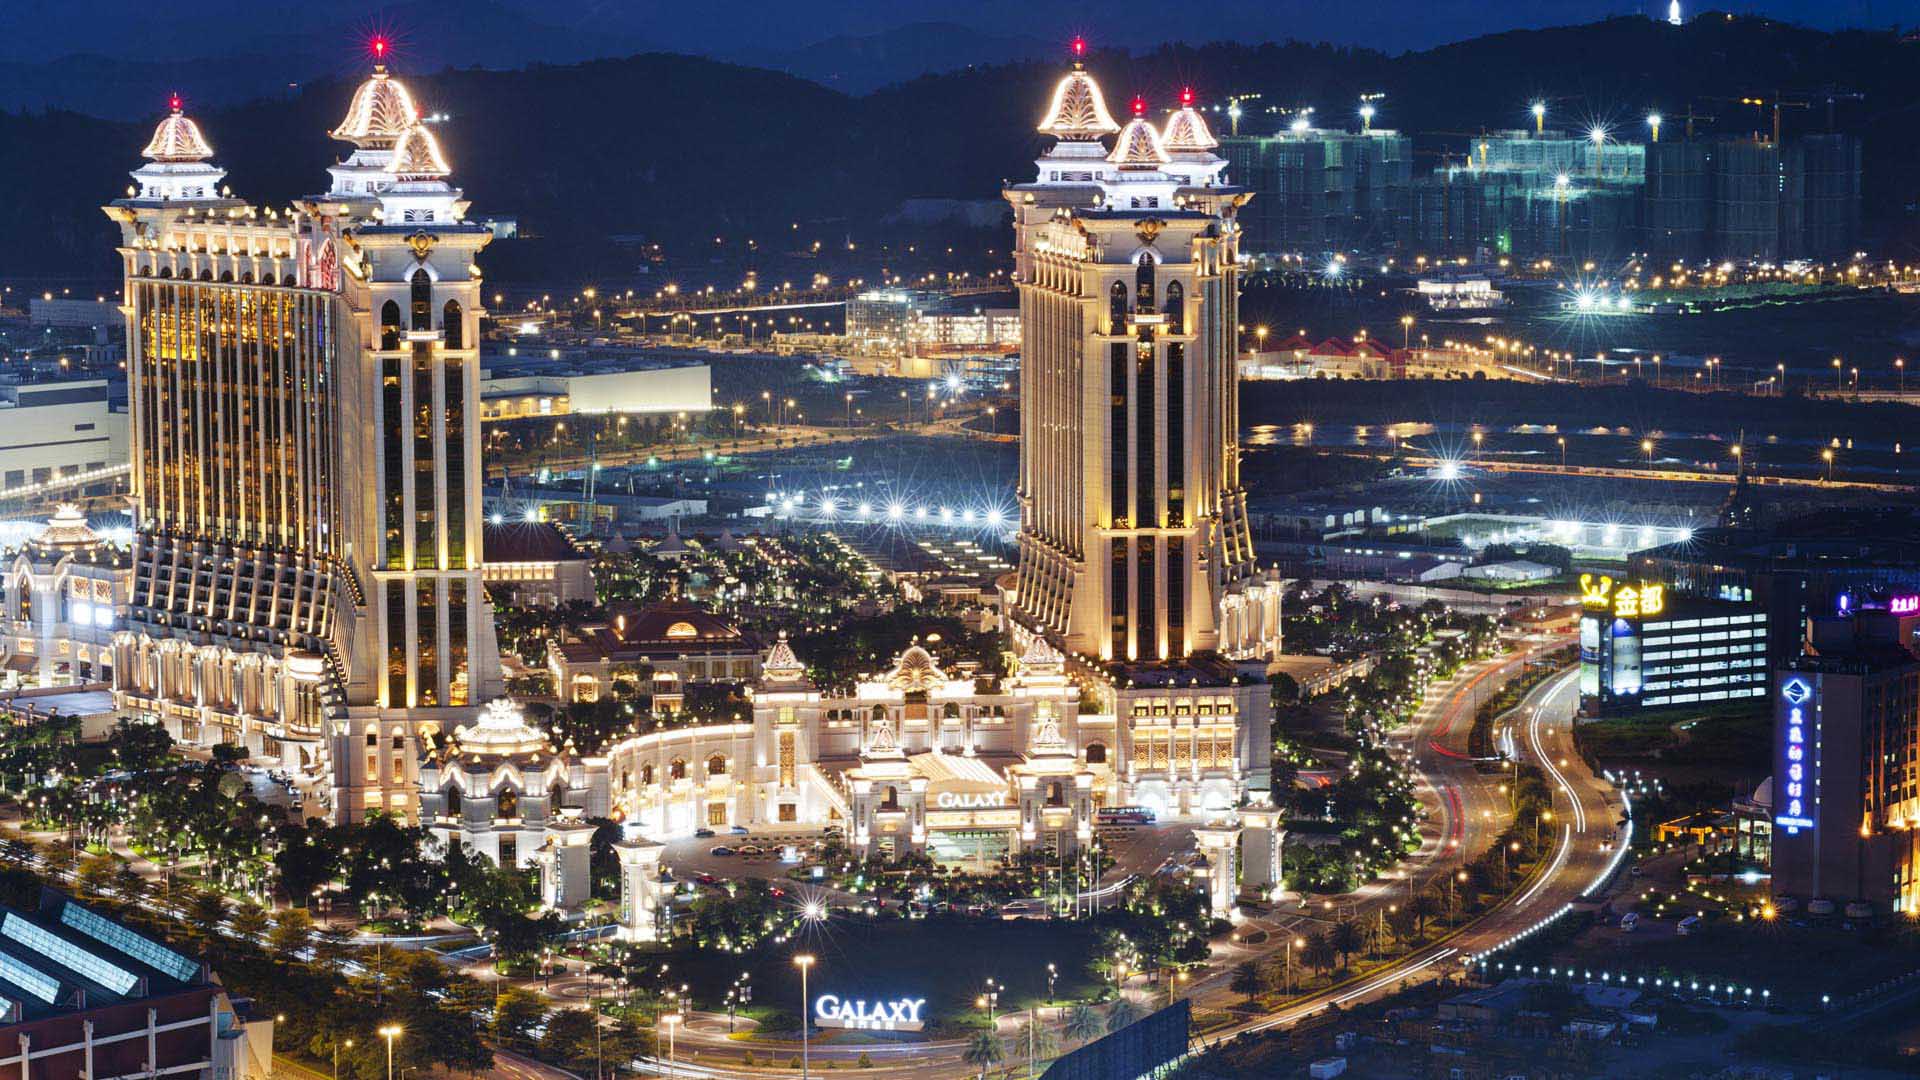 Luxury Resort Galaxy Macau Hotel & Casino China Desktop Wallpaper Full